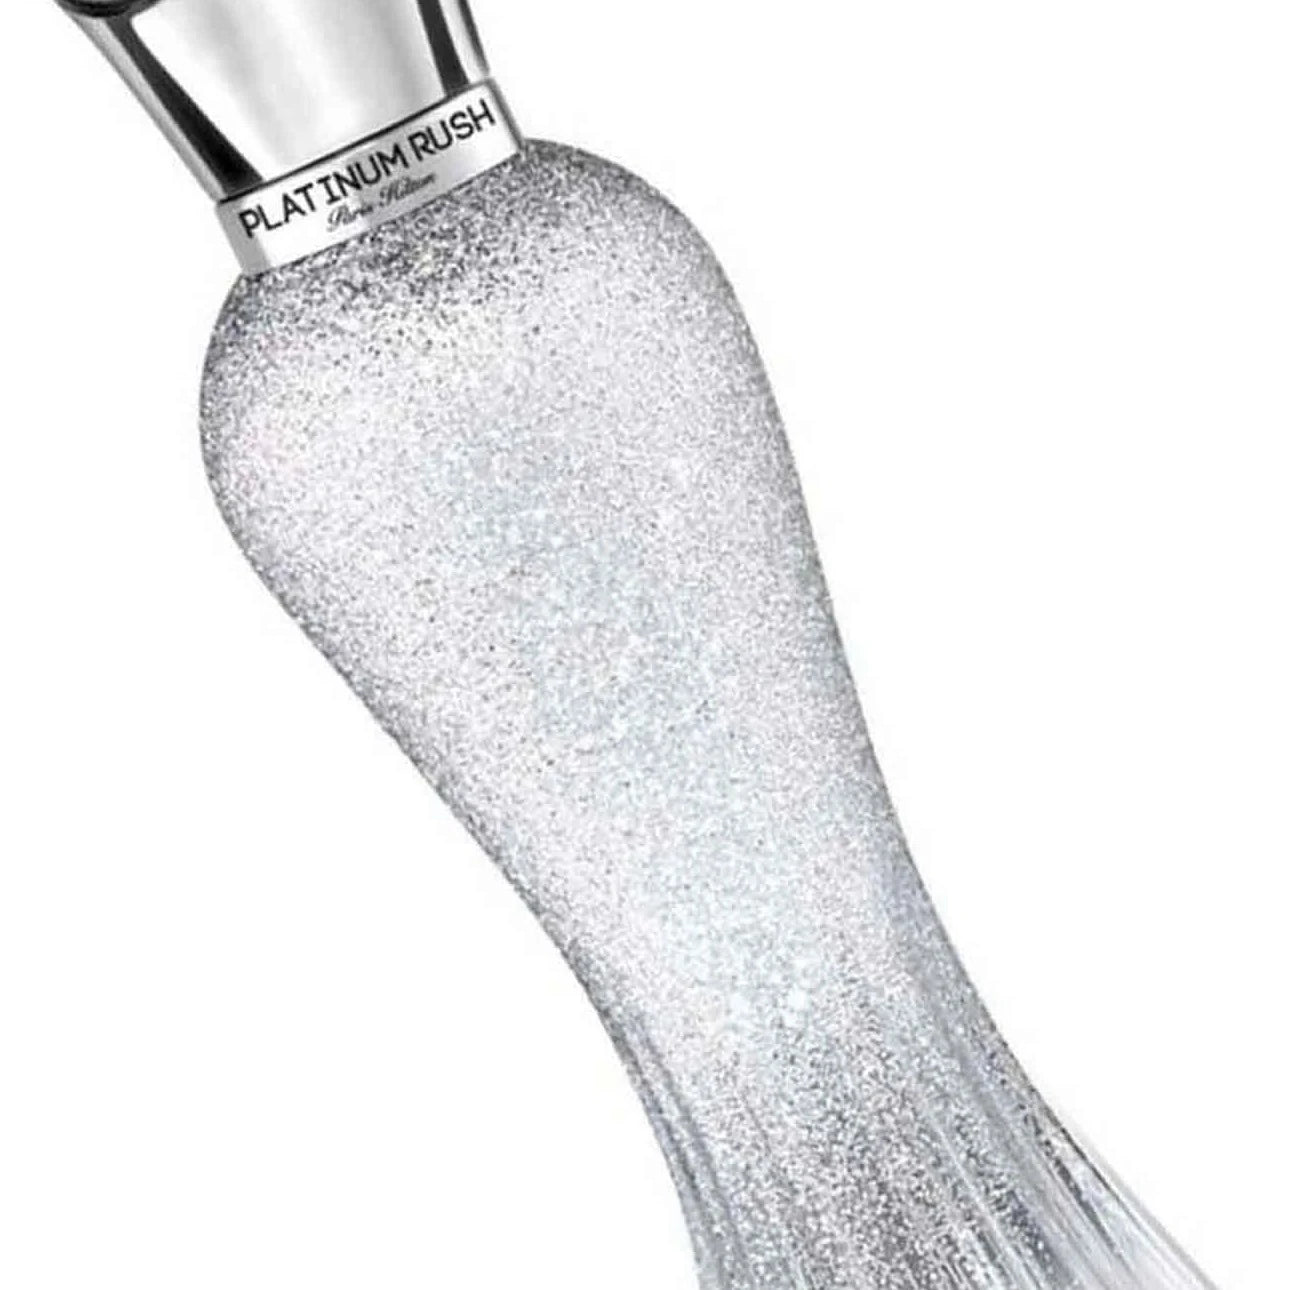 Paris Hilton Platinum Rush Luxury Fragrance Ensemble | My Perfume Shop Australia